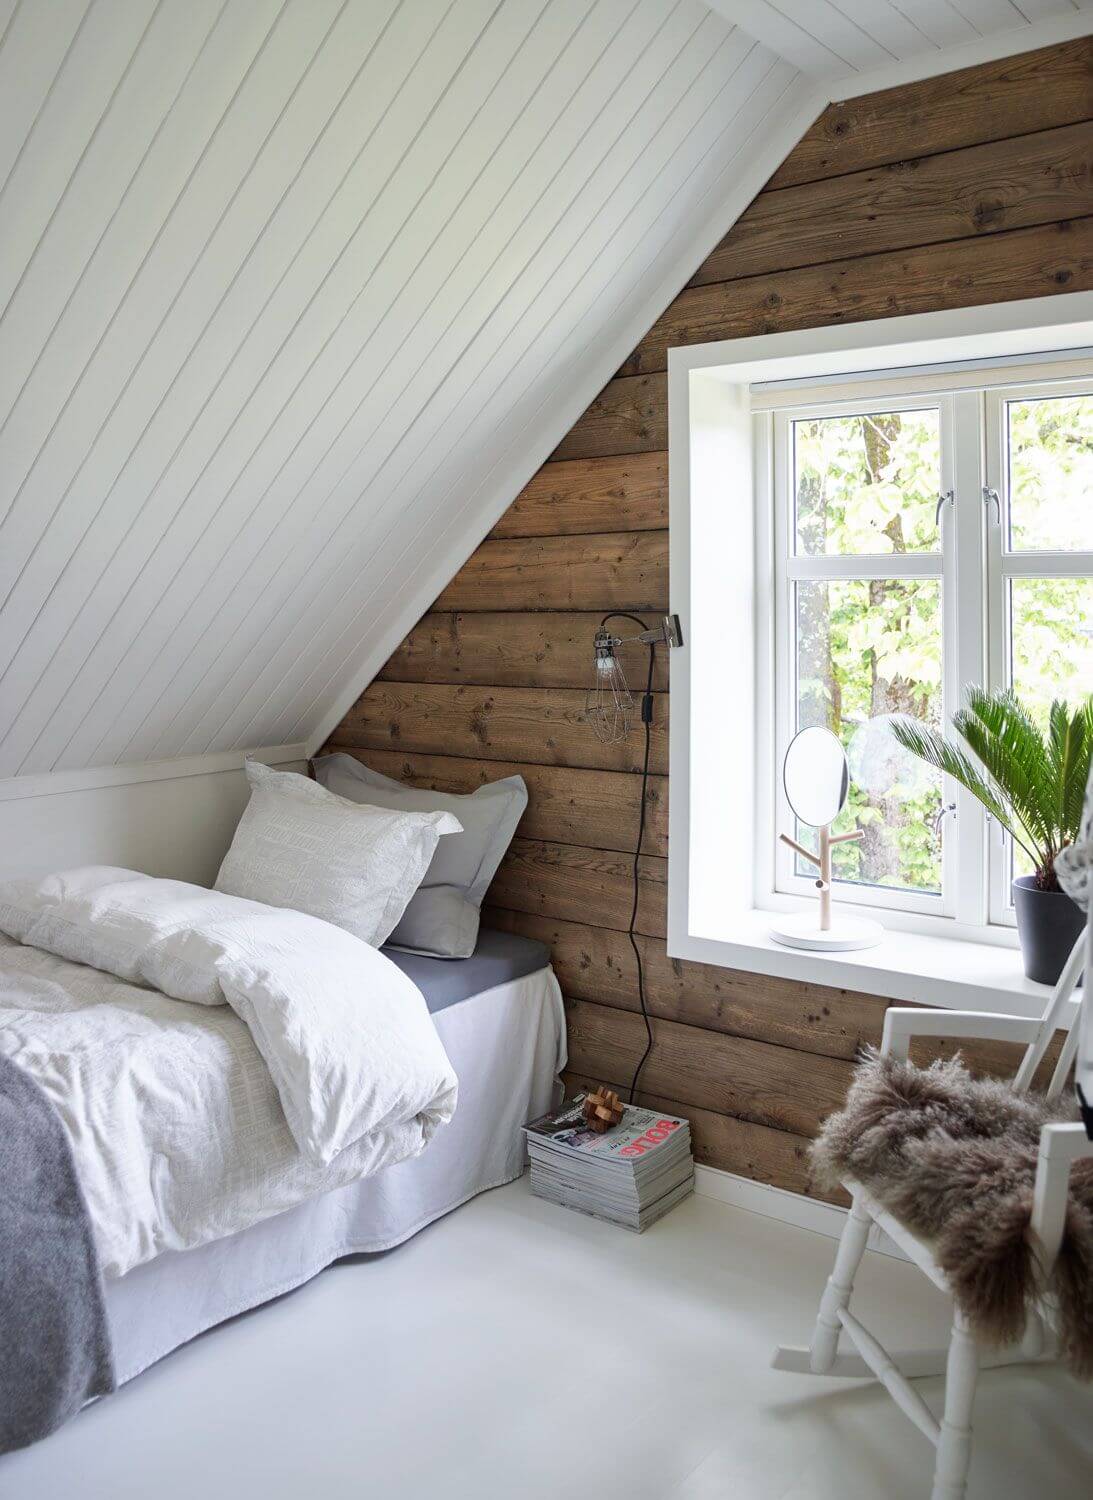 Simple bedroom in the attic